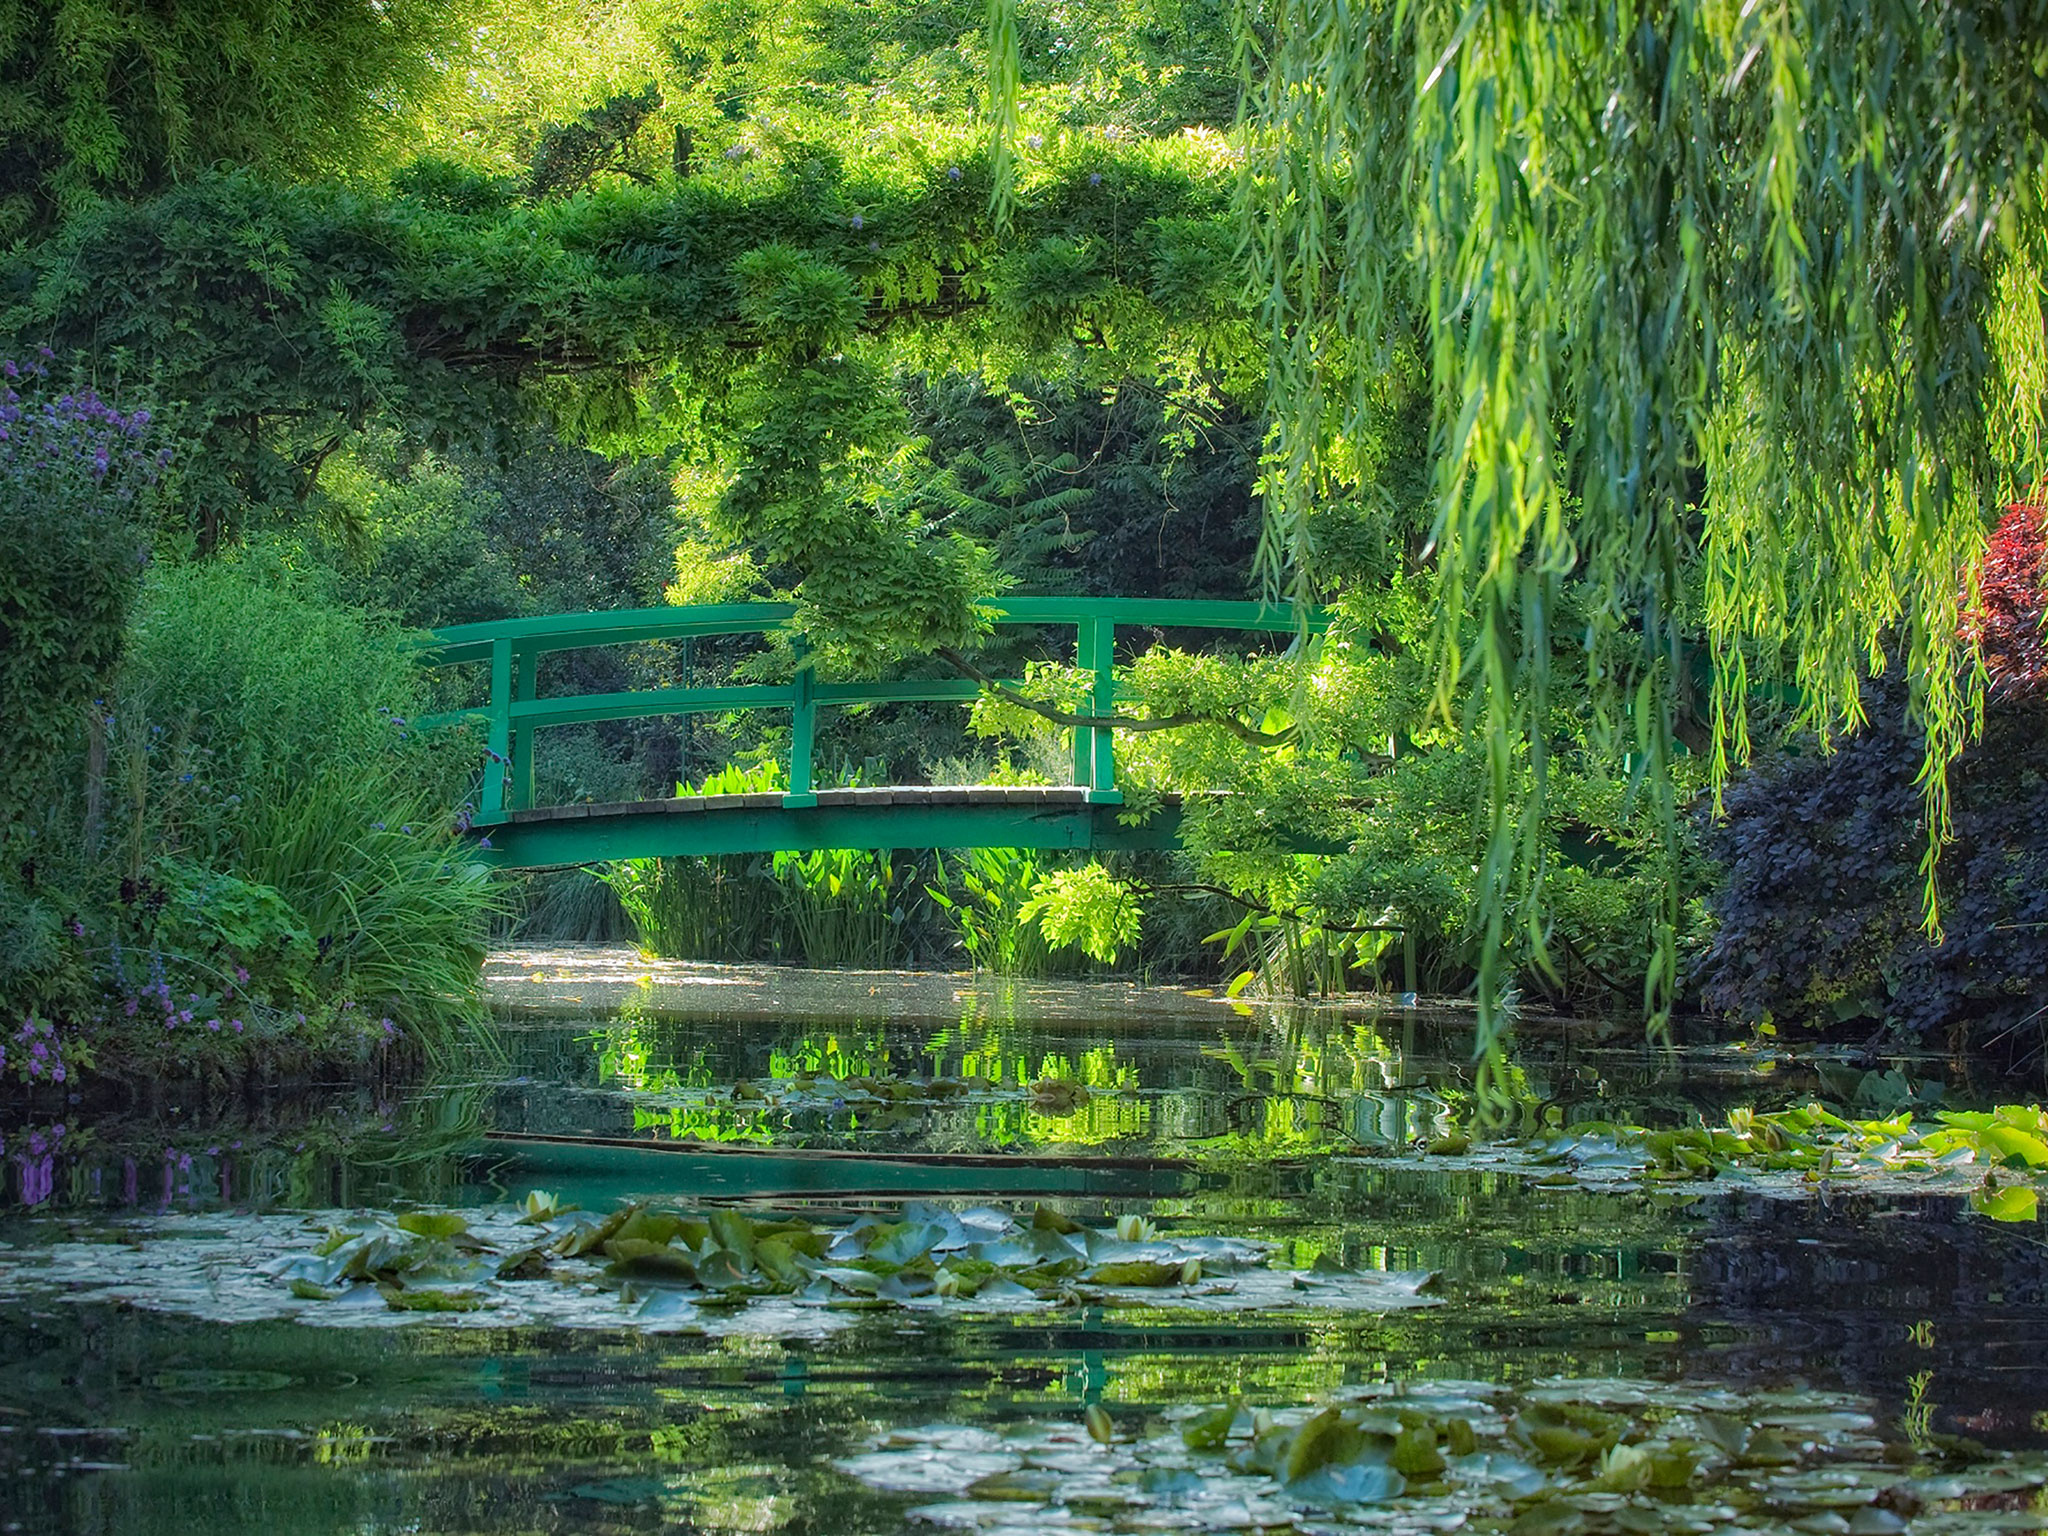 Natural Wonders: Monet's Garden, Giverny